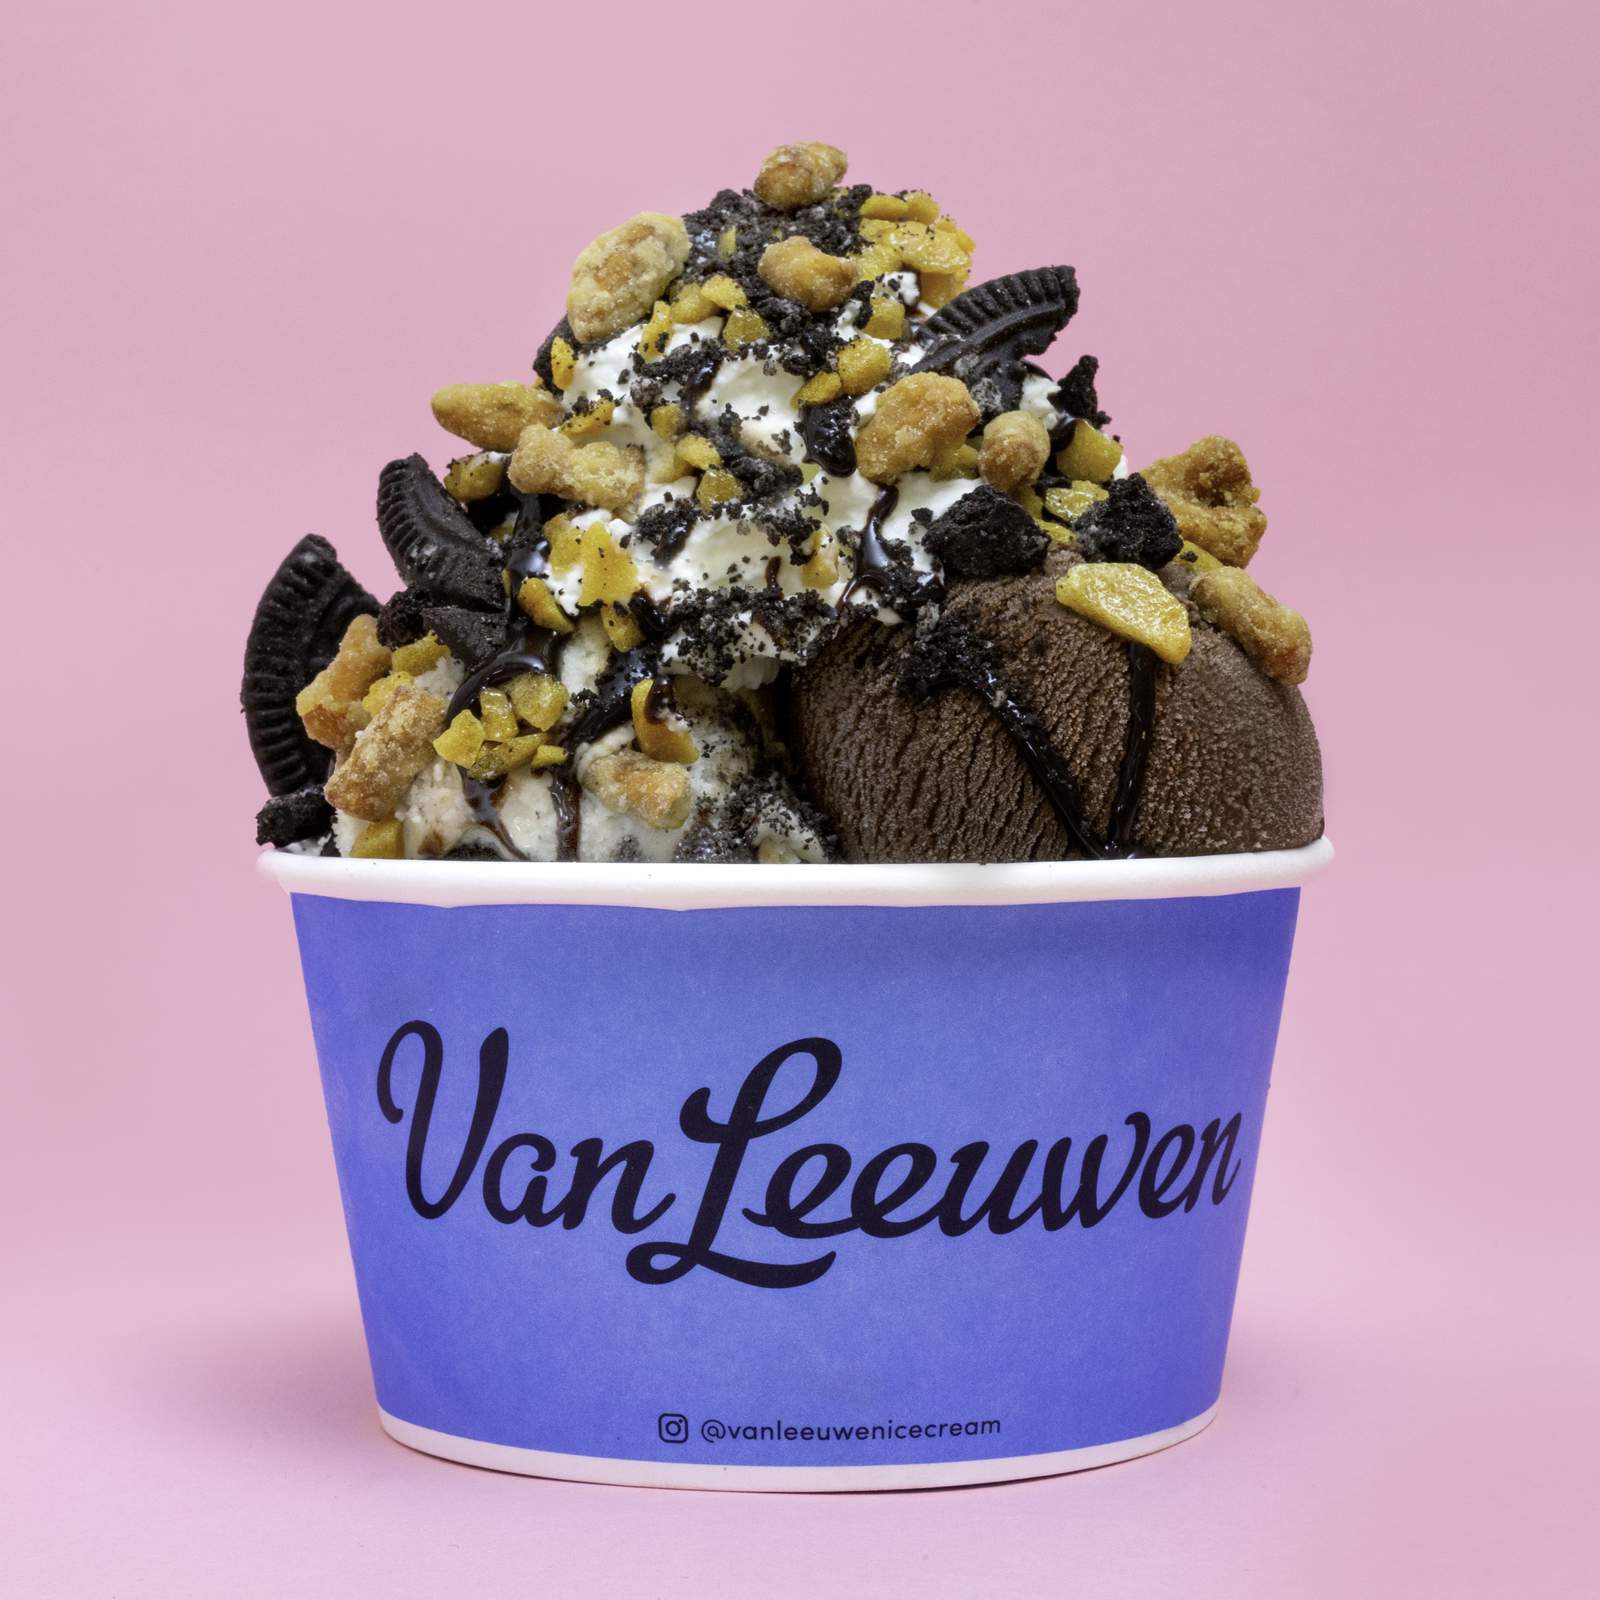 New York City-based Van Leeuwen Ice Cream to open first Texas shop in Houston’s Rice Village